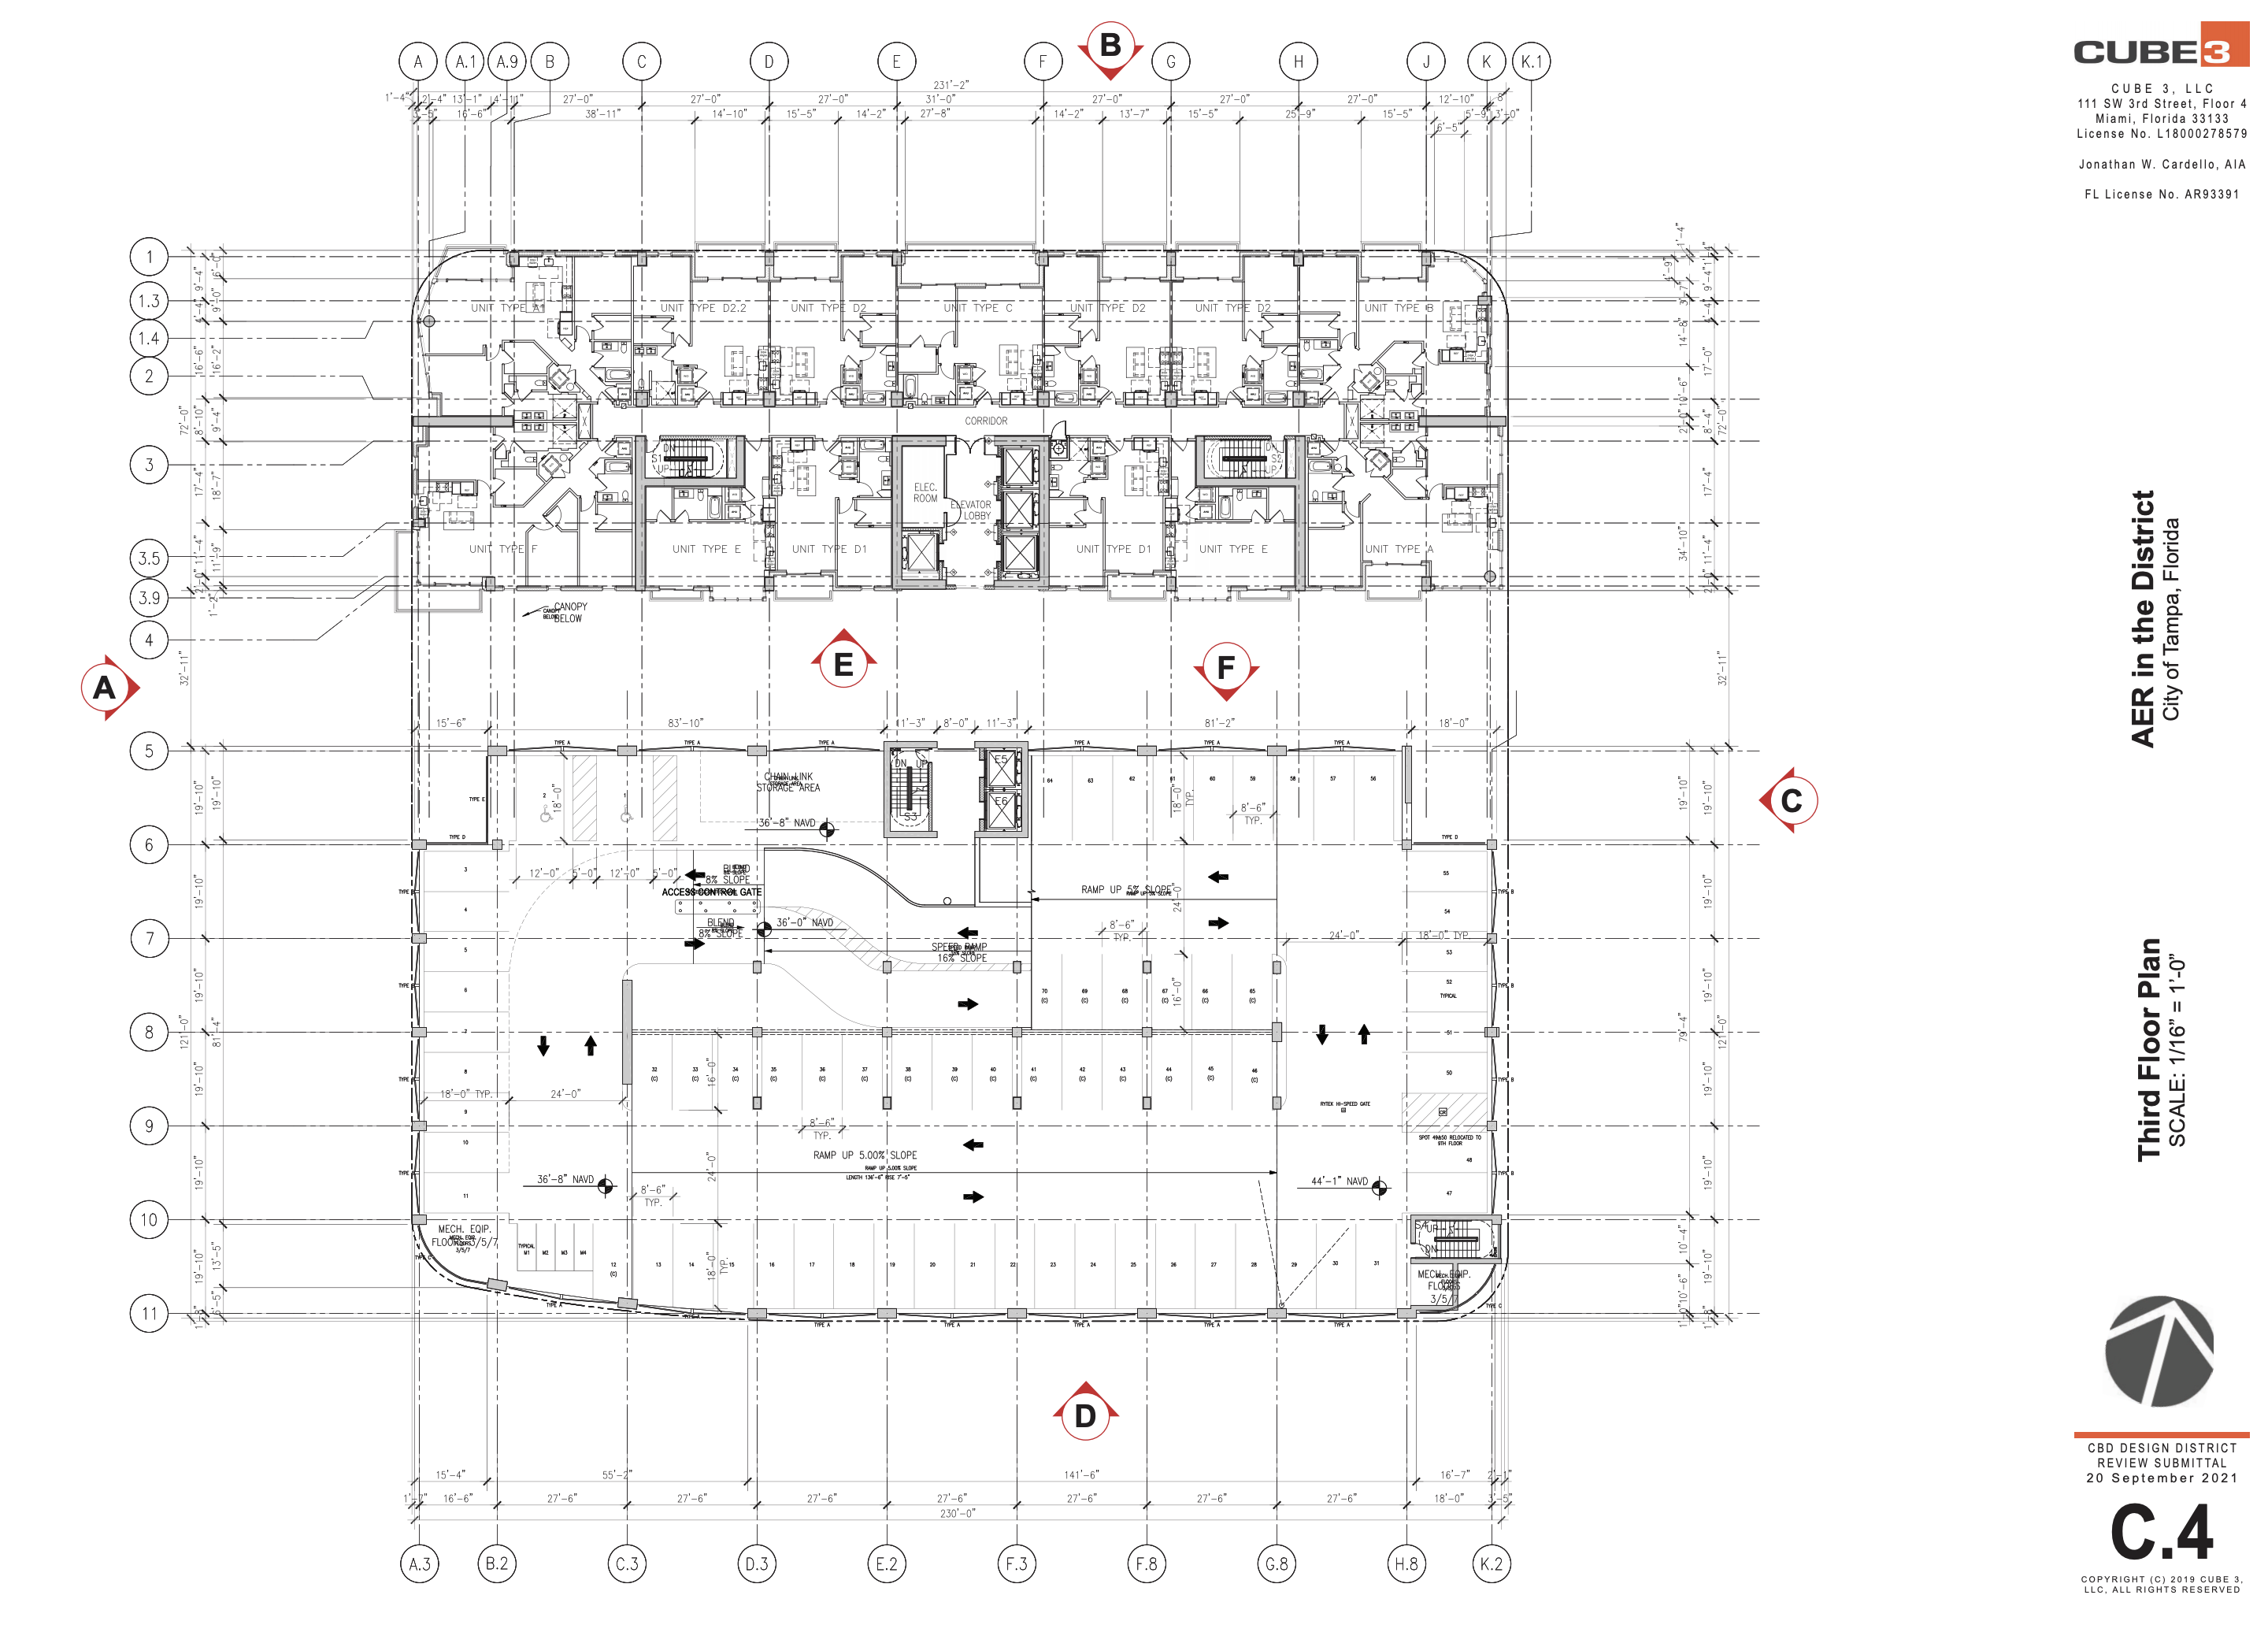 Third Floor Plan. Courtesy of Cube 3.